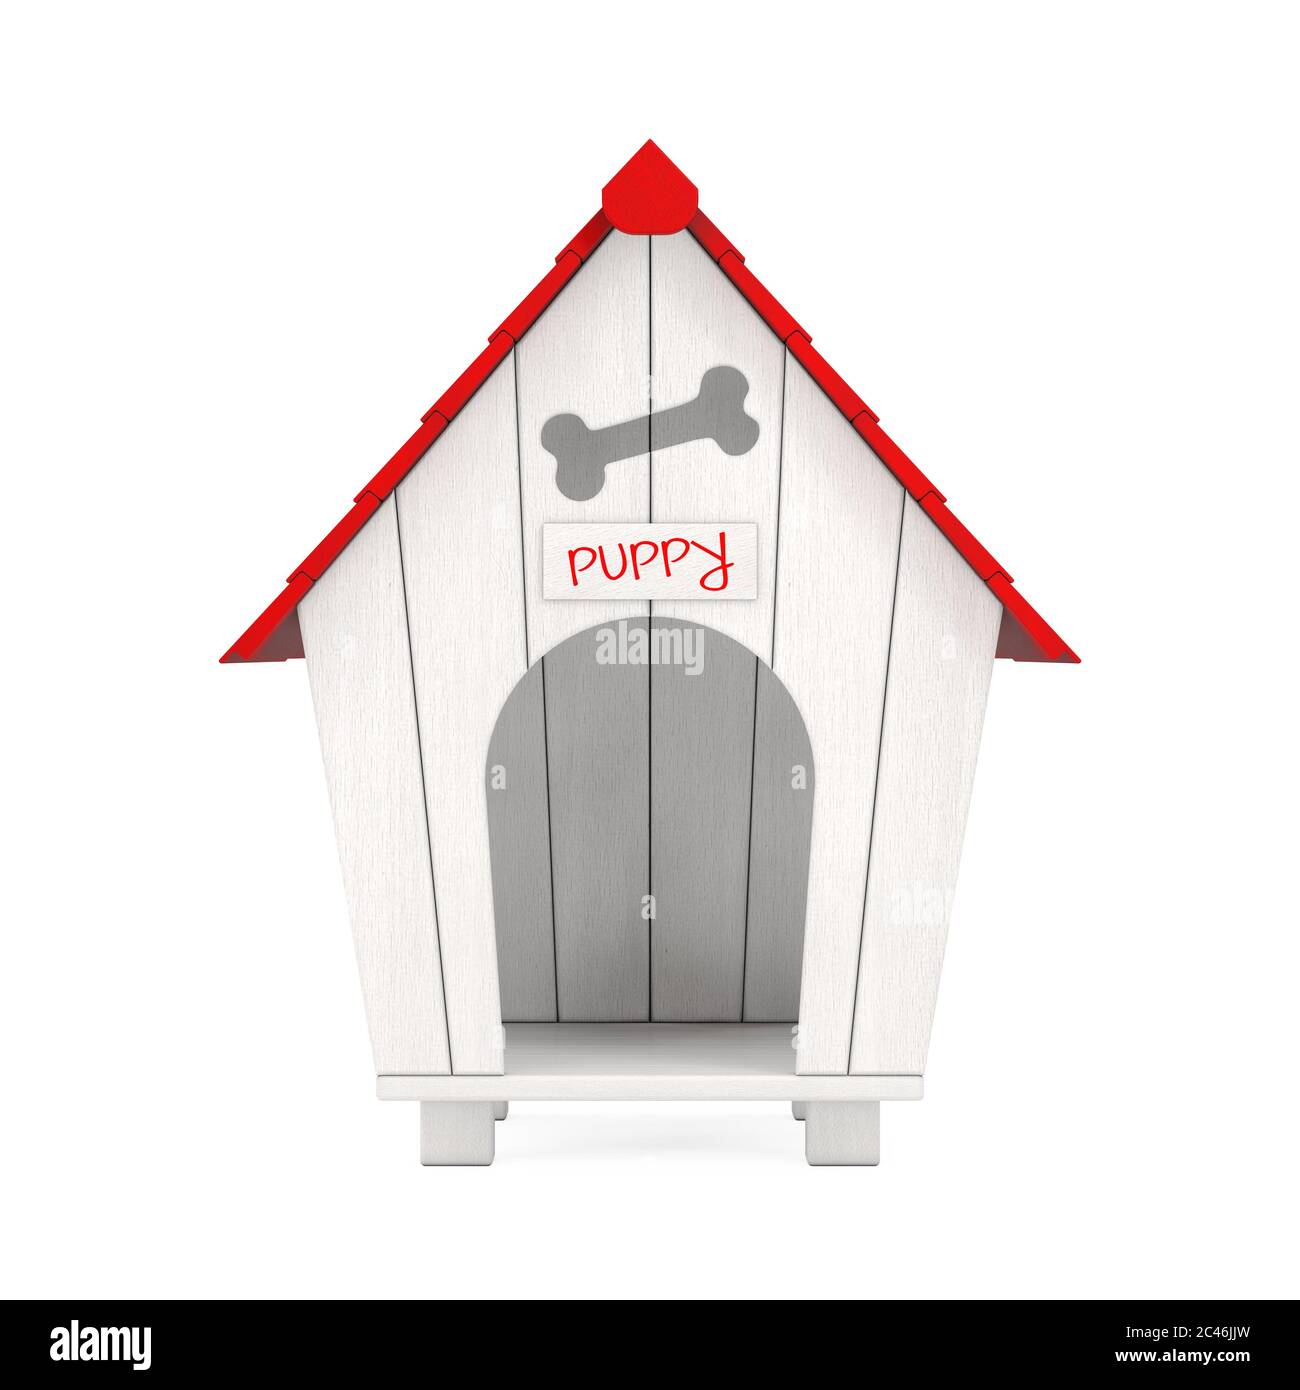  Lunarable Casa para perros de madera de hongos, diseño de  dibujos animados de estilo minimalista, patrón repetitivo de impresión  simétrica de motivos, perrera portátil para perros para exteriores e  interiores con